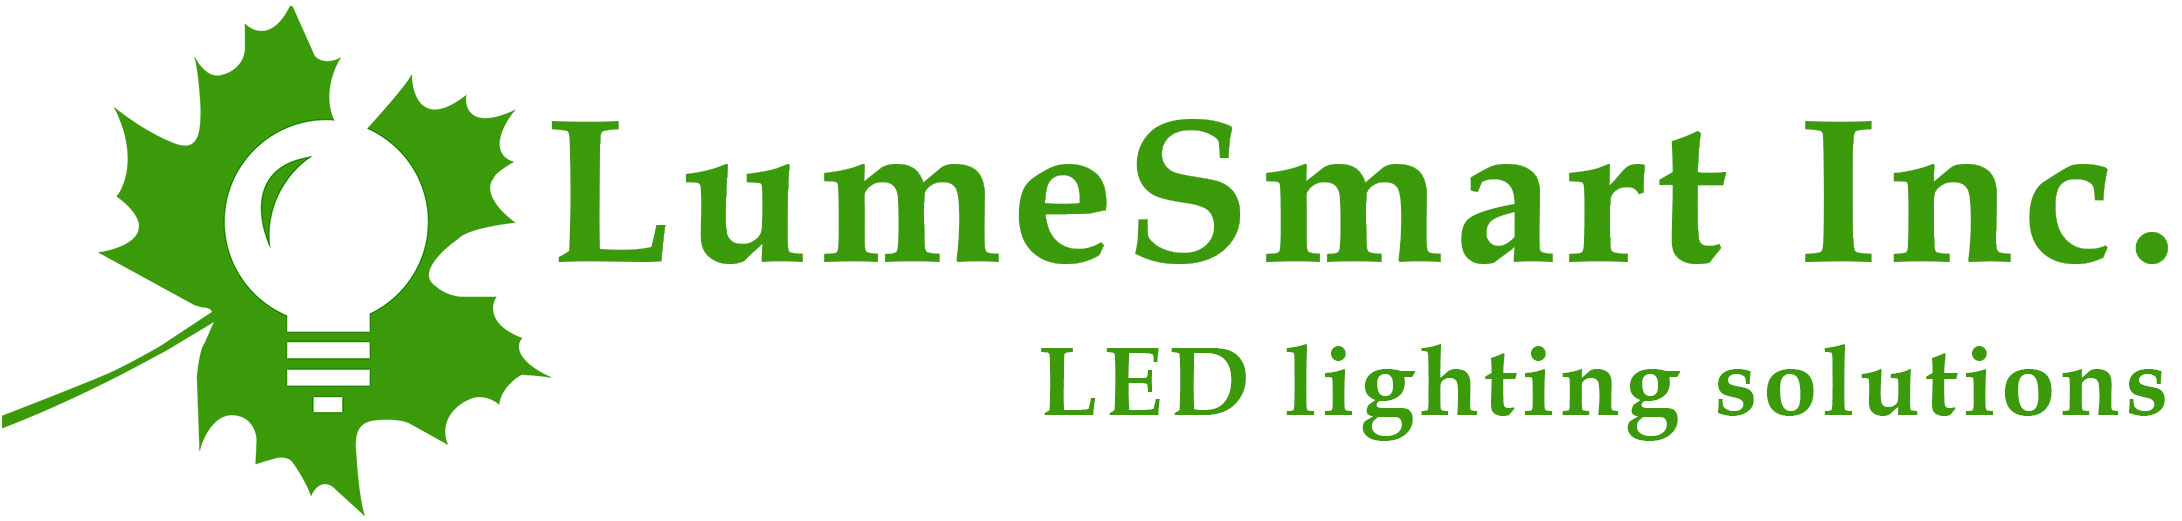 lumesmart-Inc-LED-lighting-solutionss